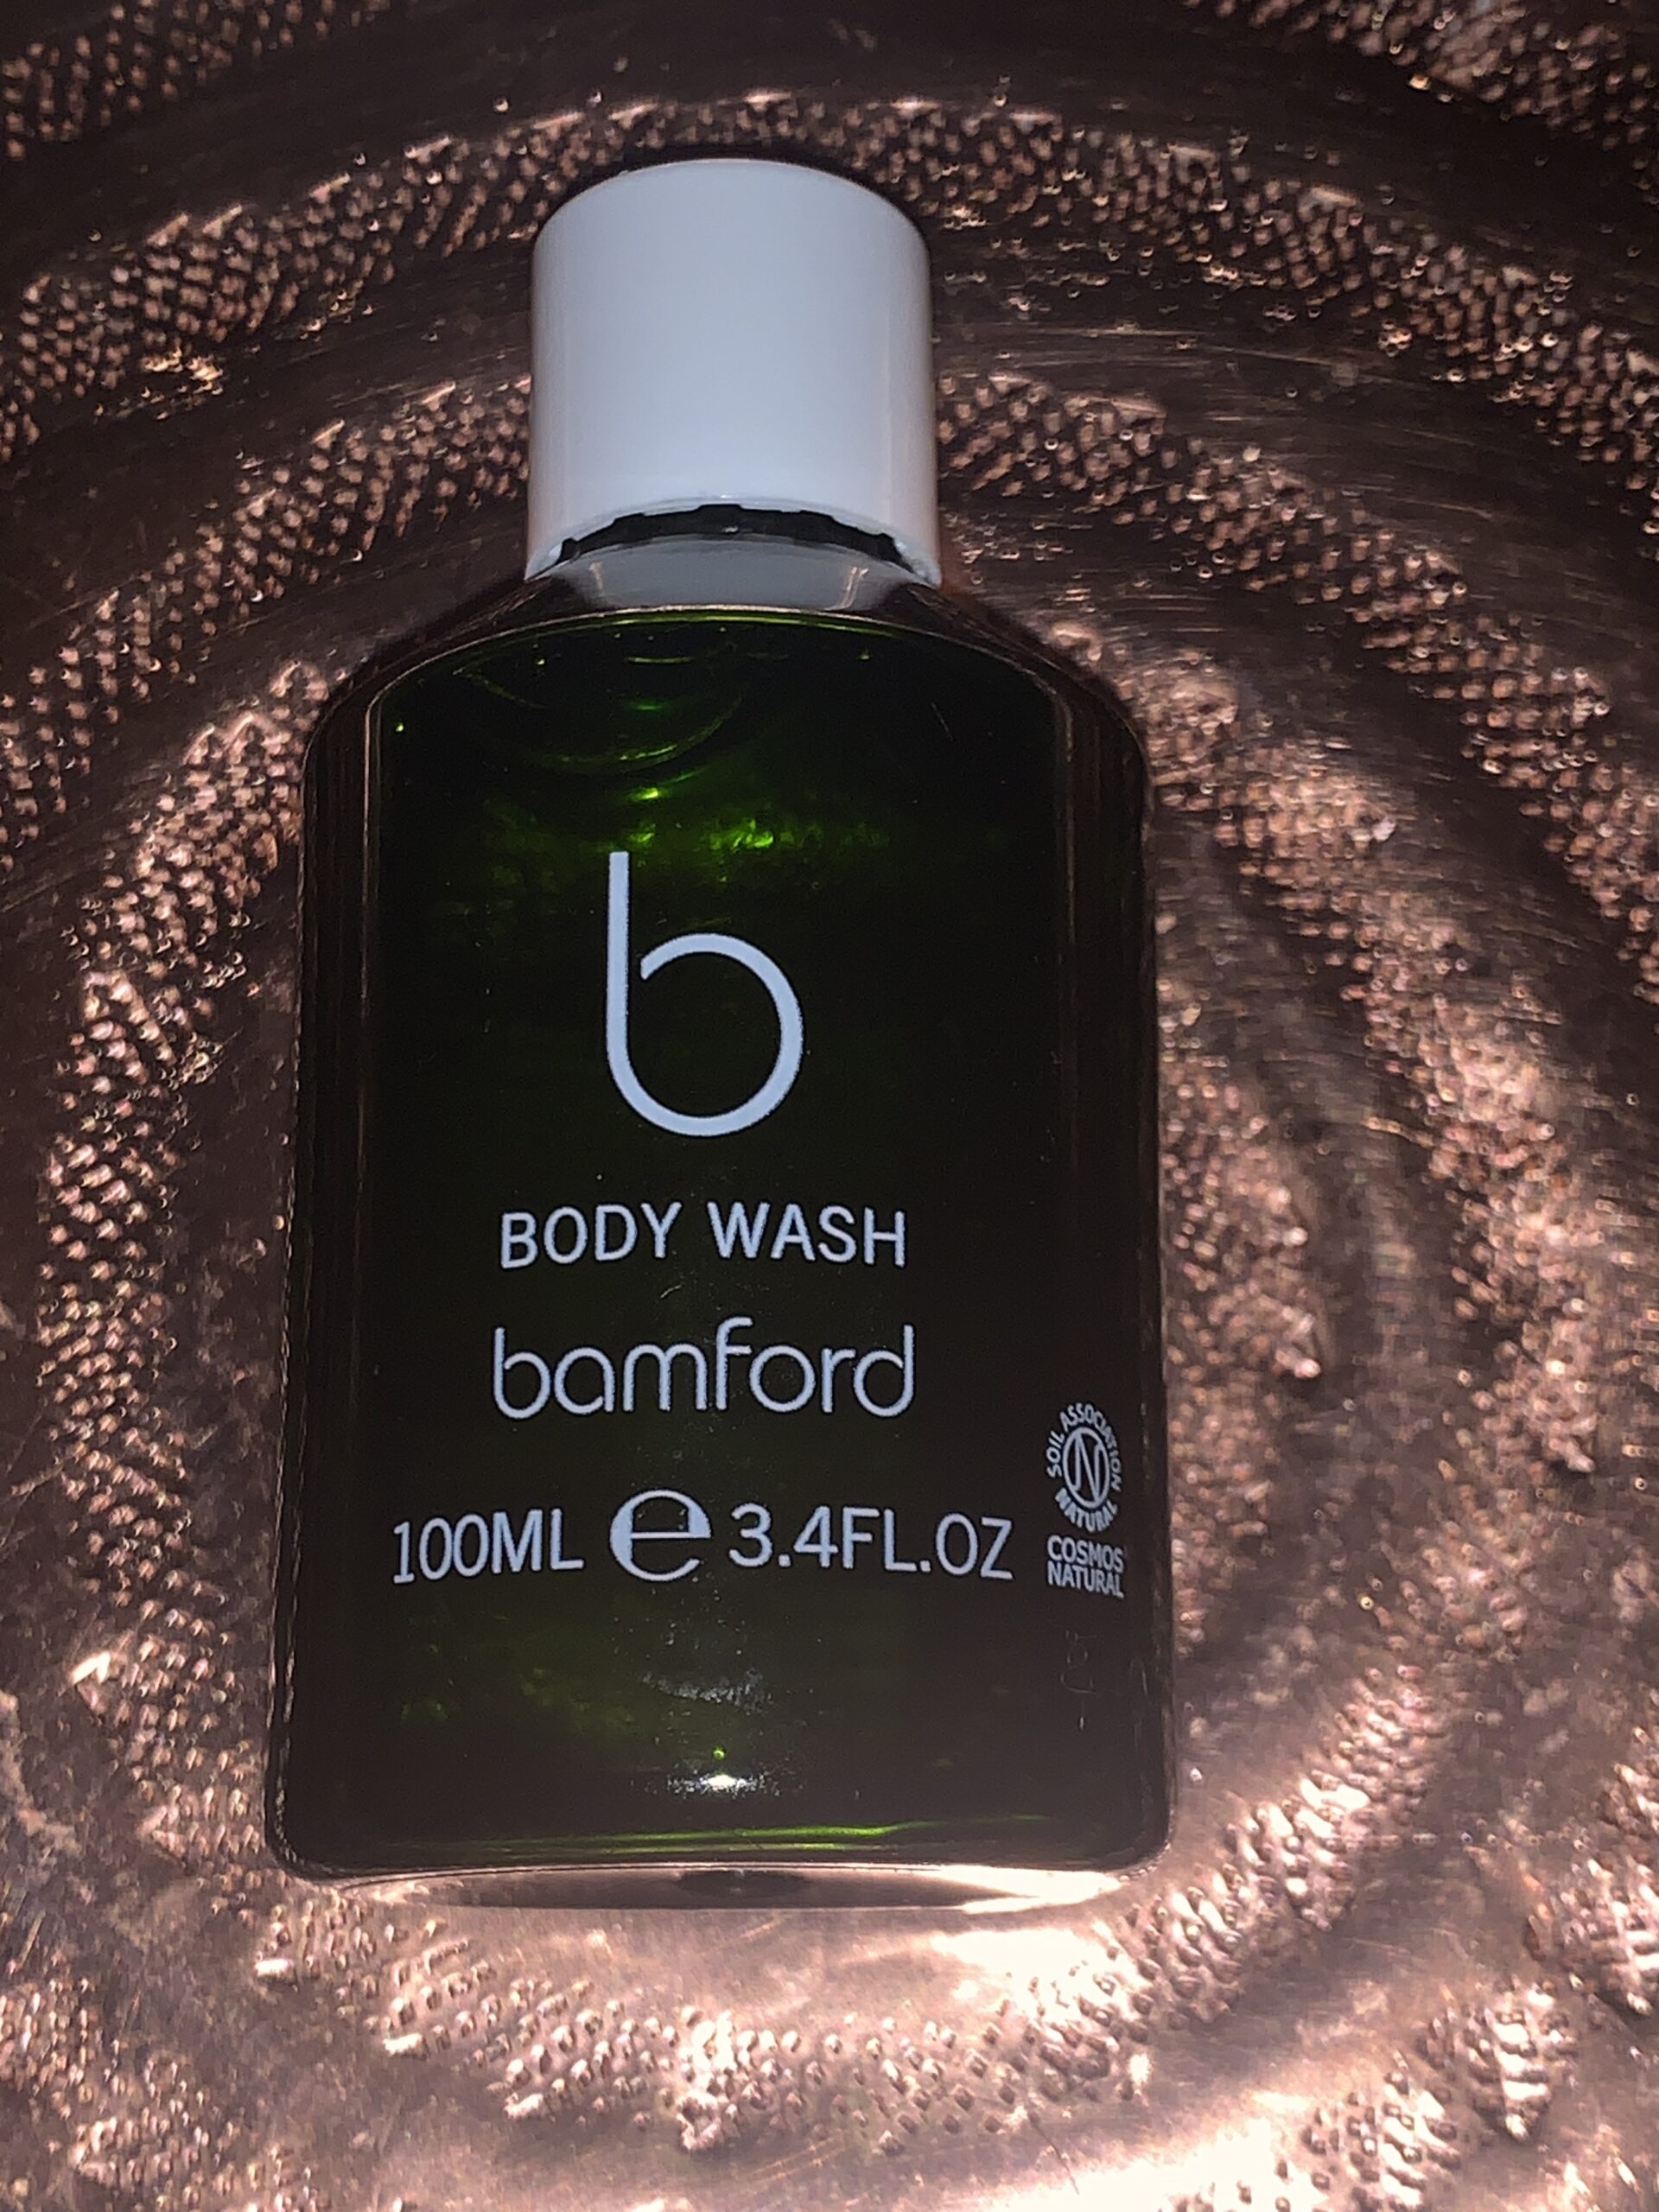 Bamford body wash